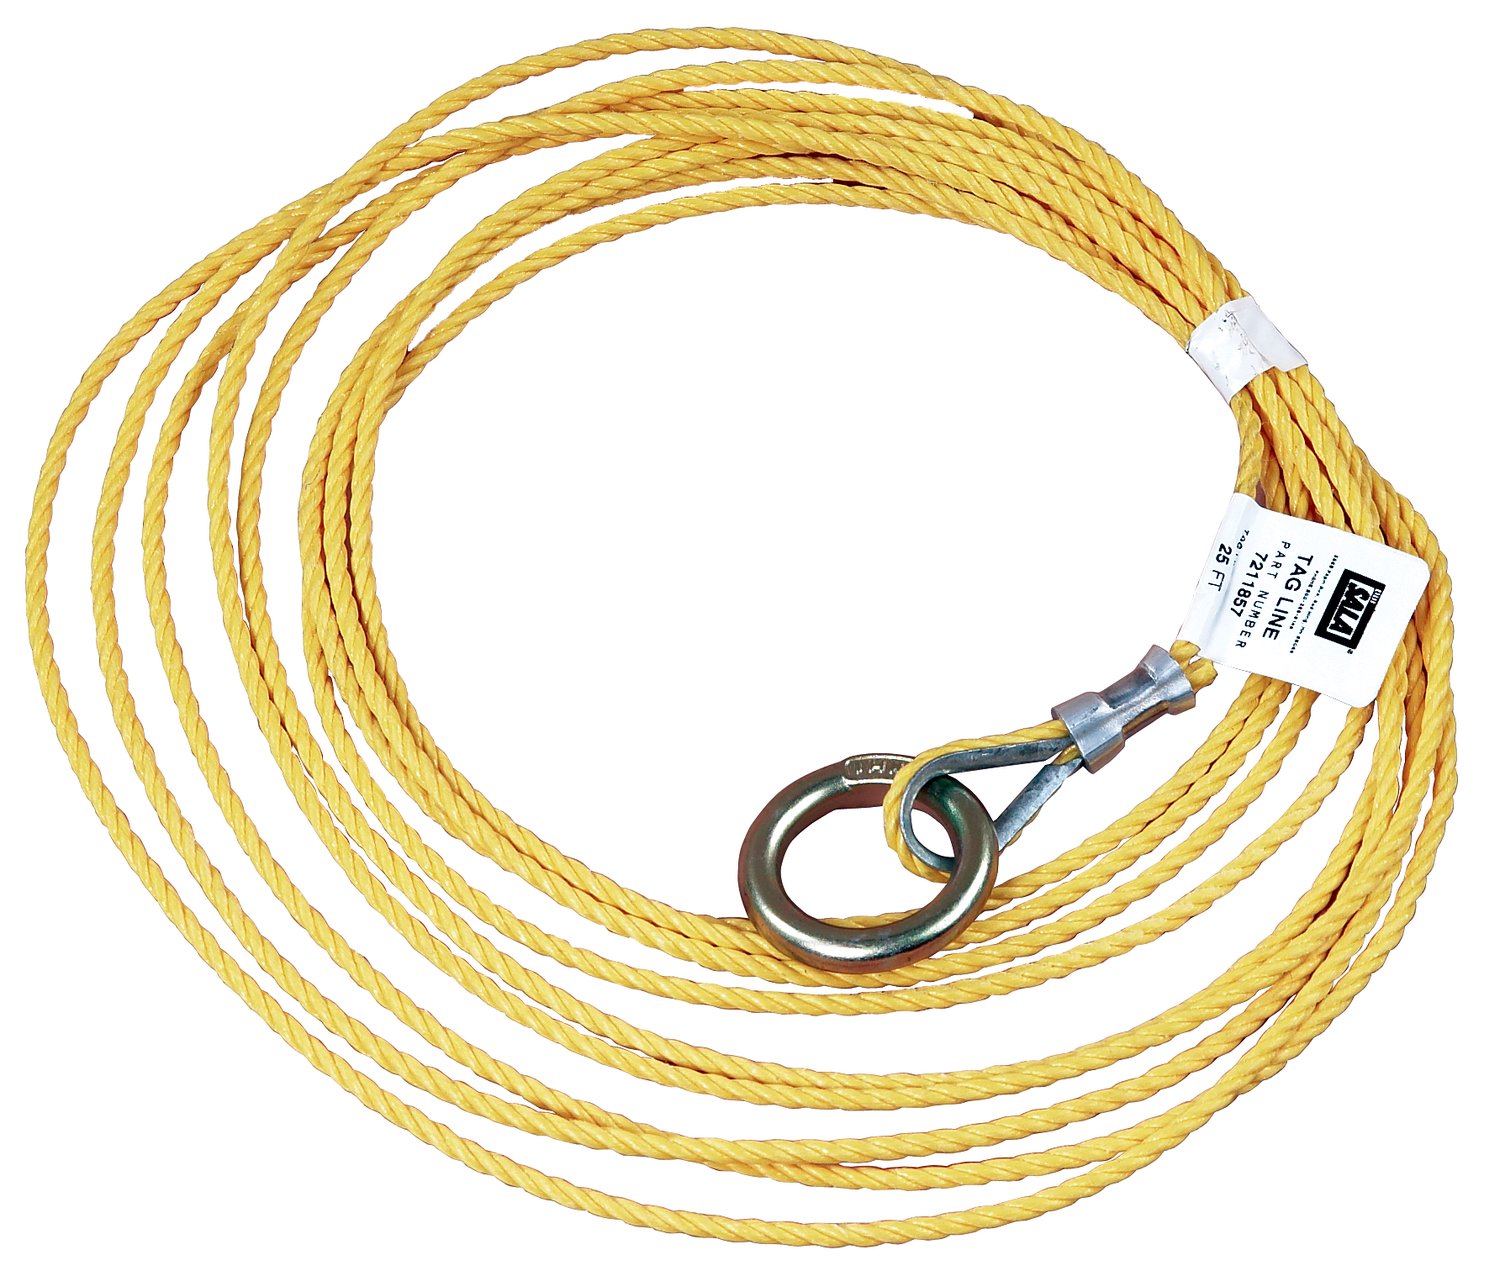 7100263248 - 3M DBI-SALA Rope Tagline 7211858, 3/16 in Polypropylene, 35 ft